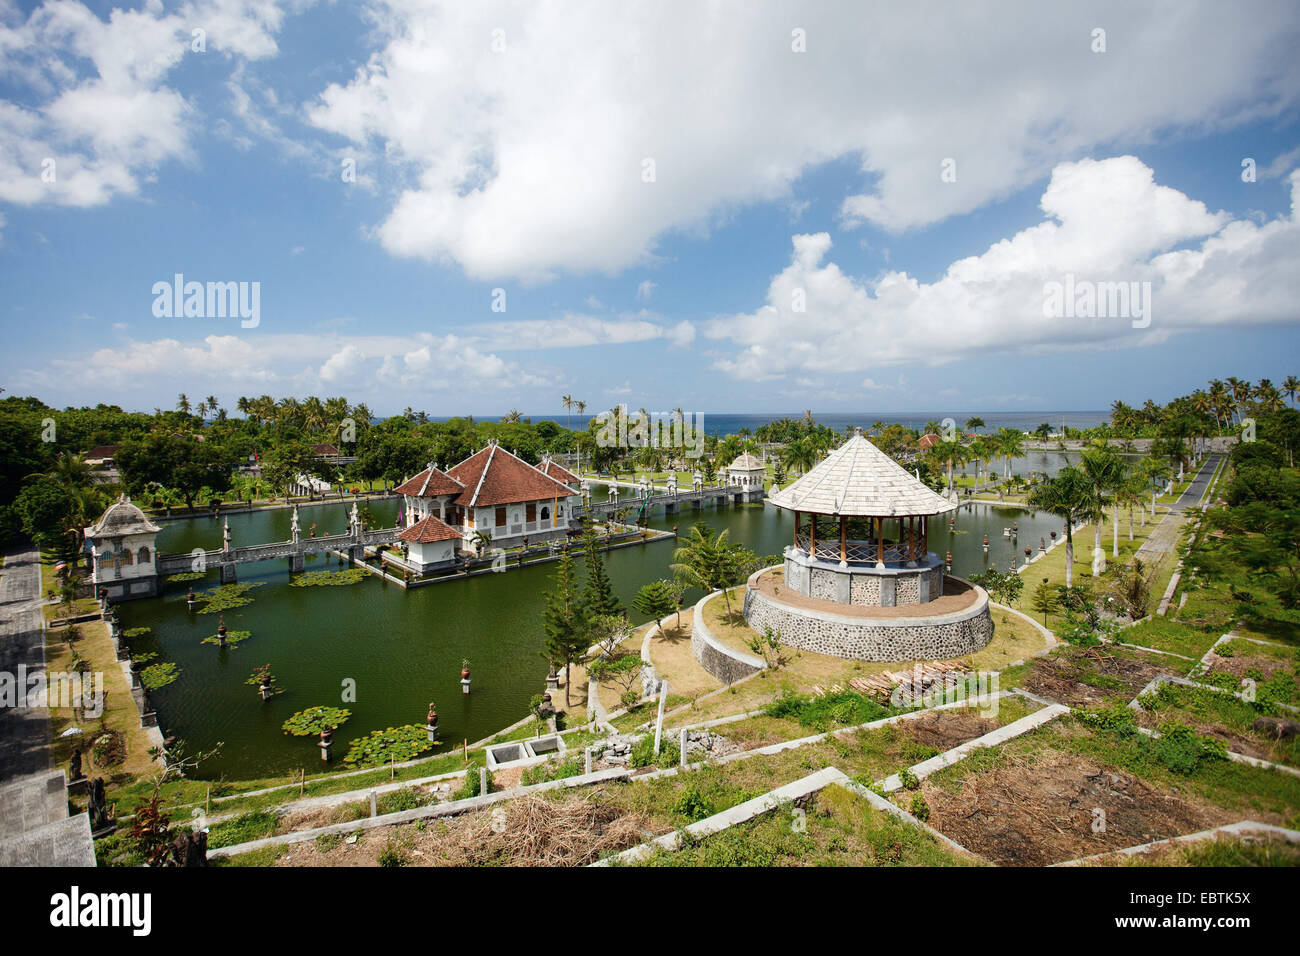 Bella la Taman Ujung acqua Palace, Indonesia Bali Foto Stock